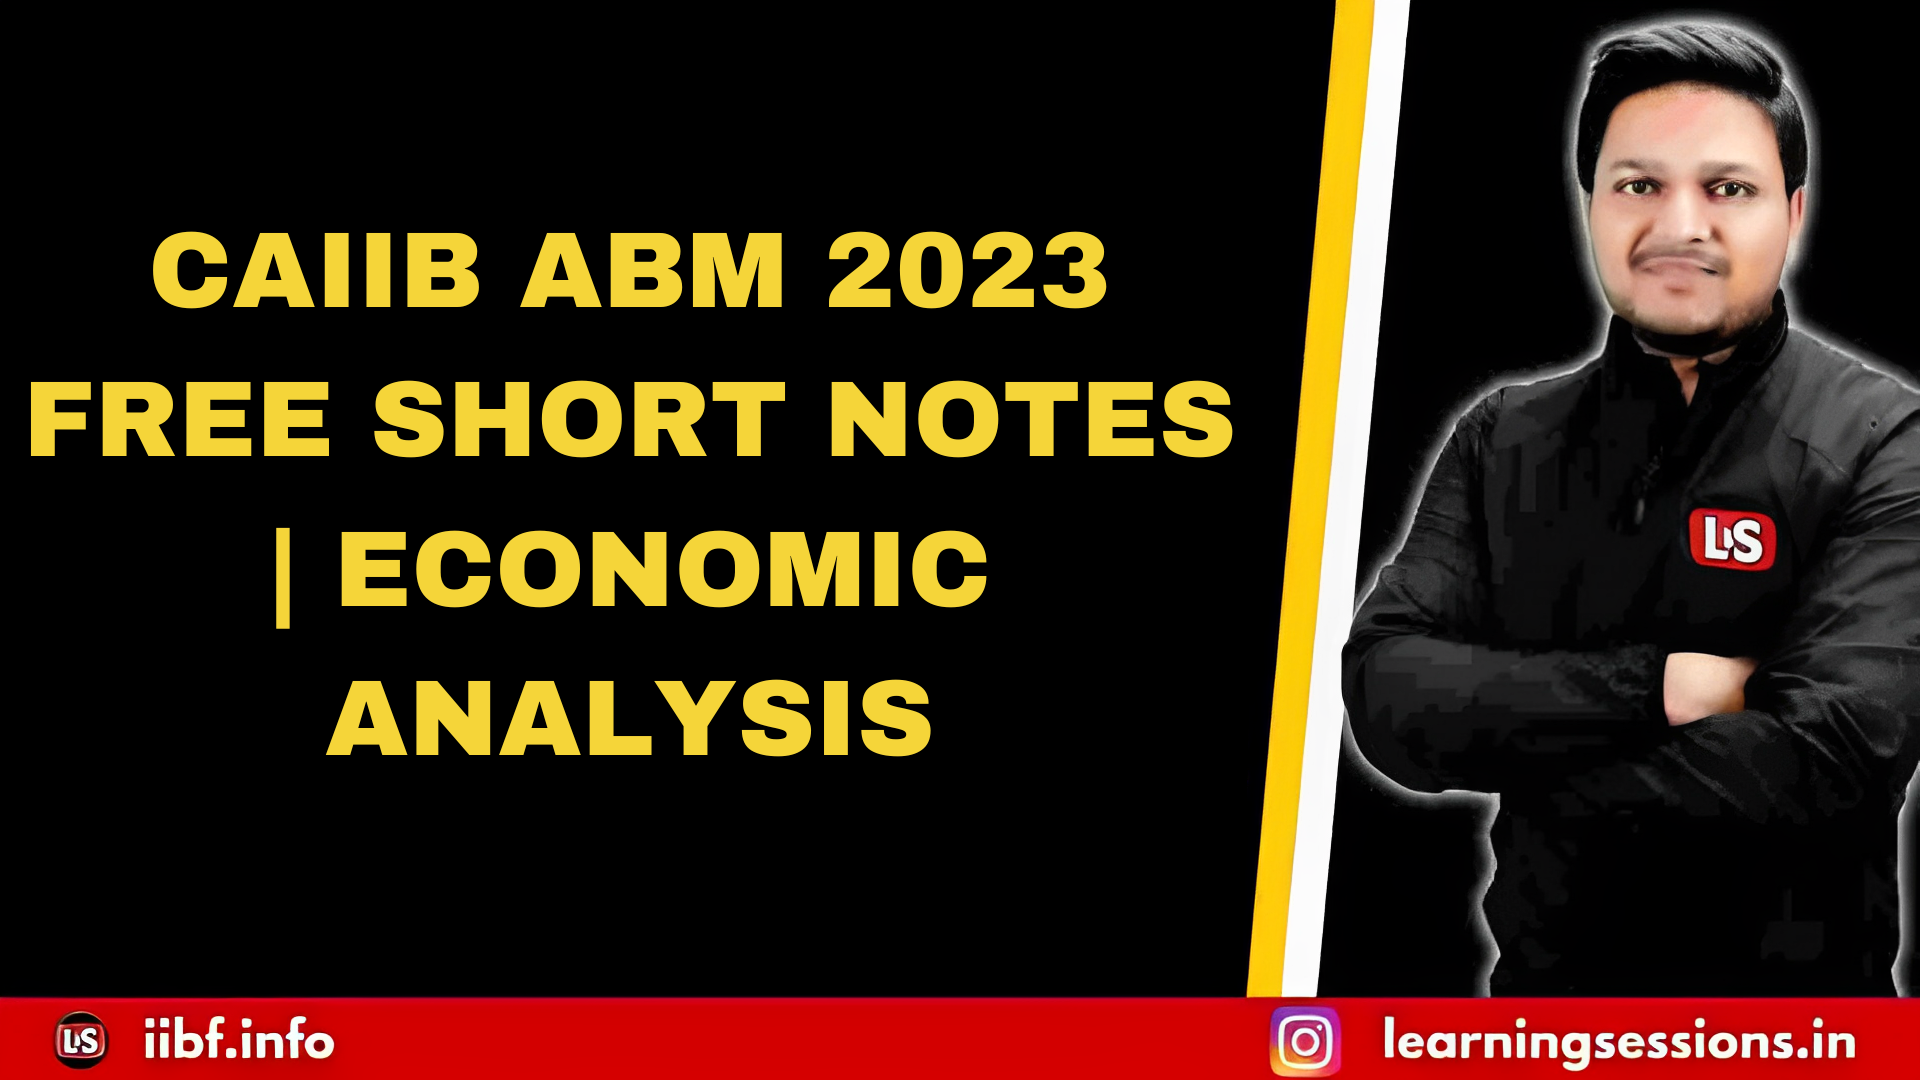 CAIIB ABM 2023 FREE SHORT NOTES | ECONOMIC ANALYSIS